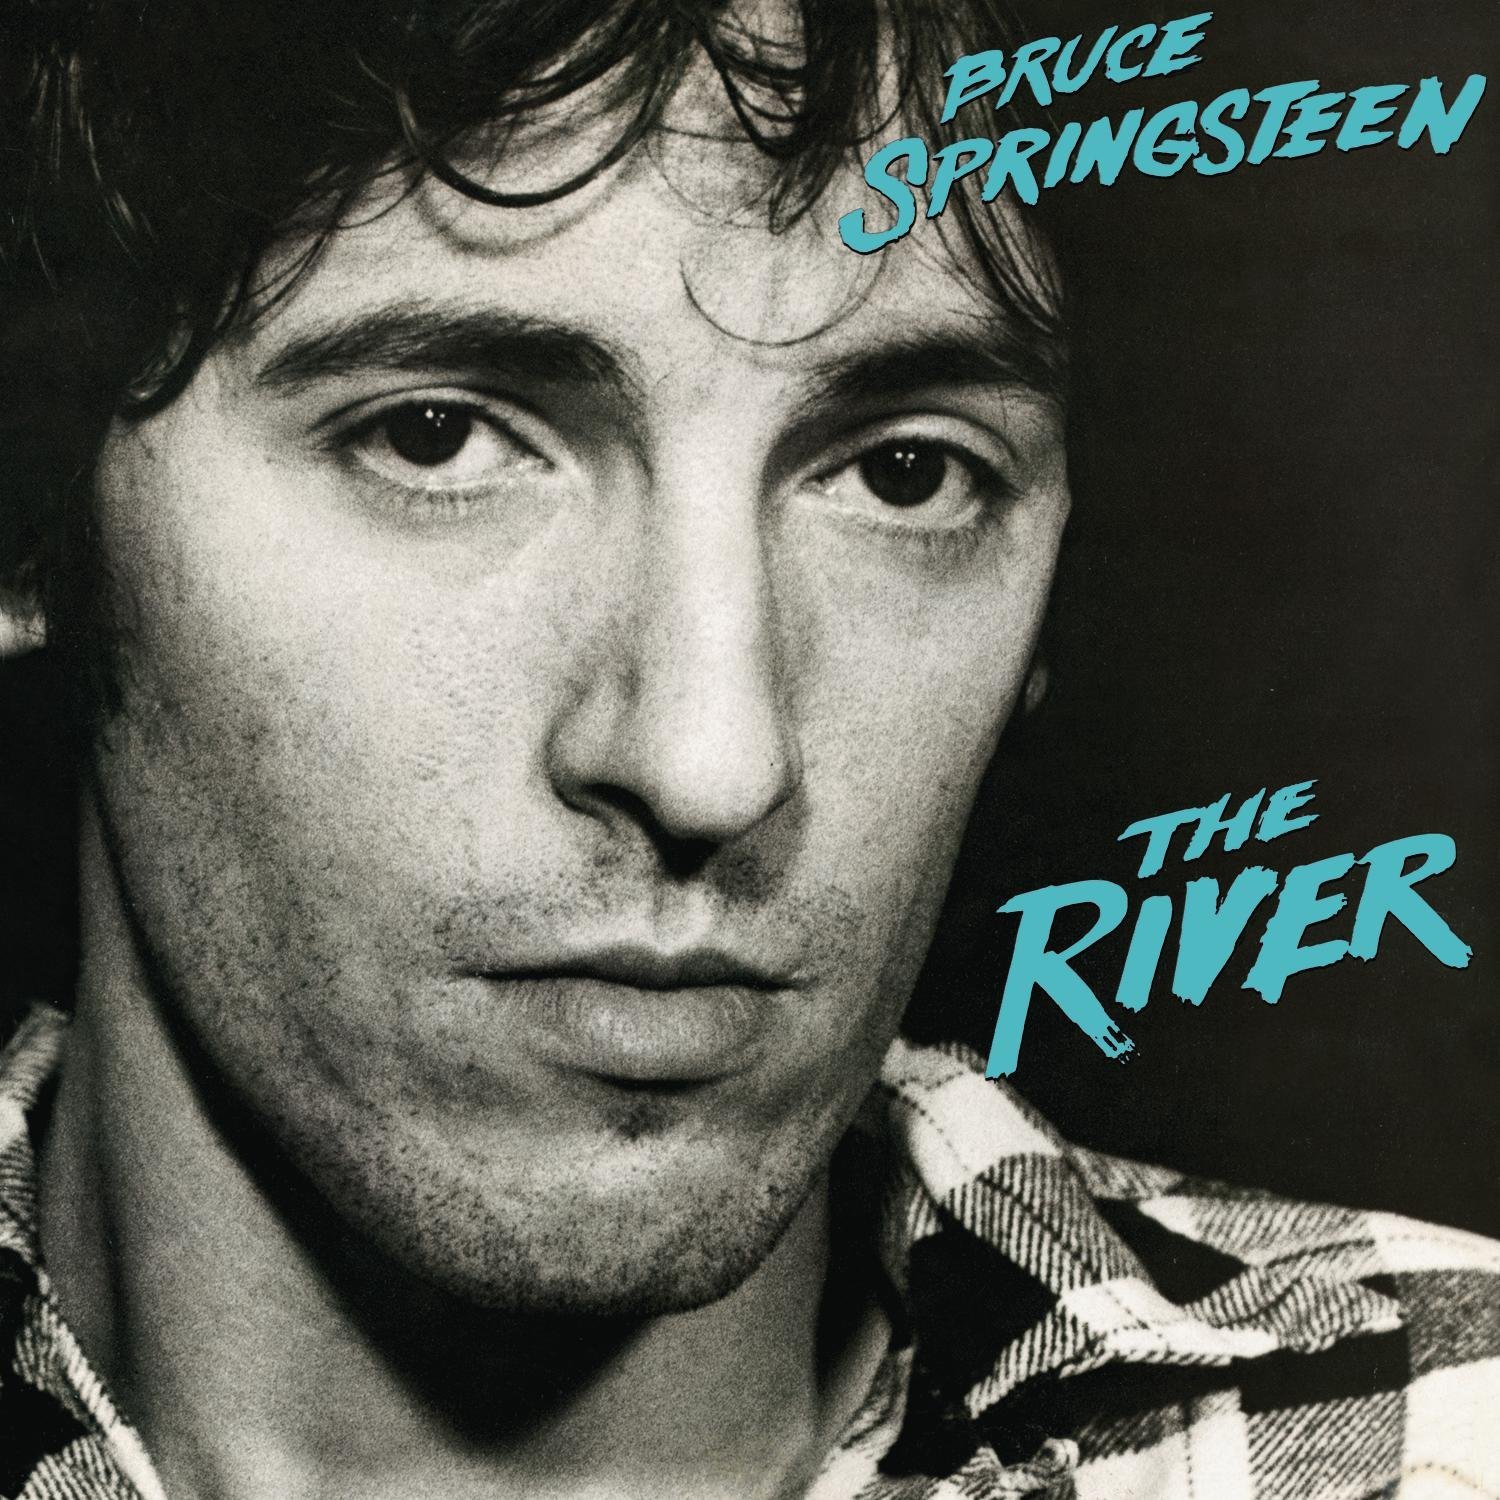 The River Album Review